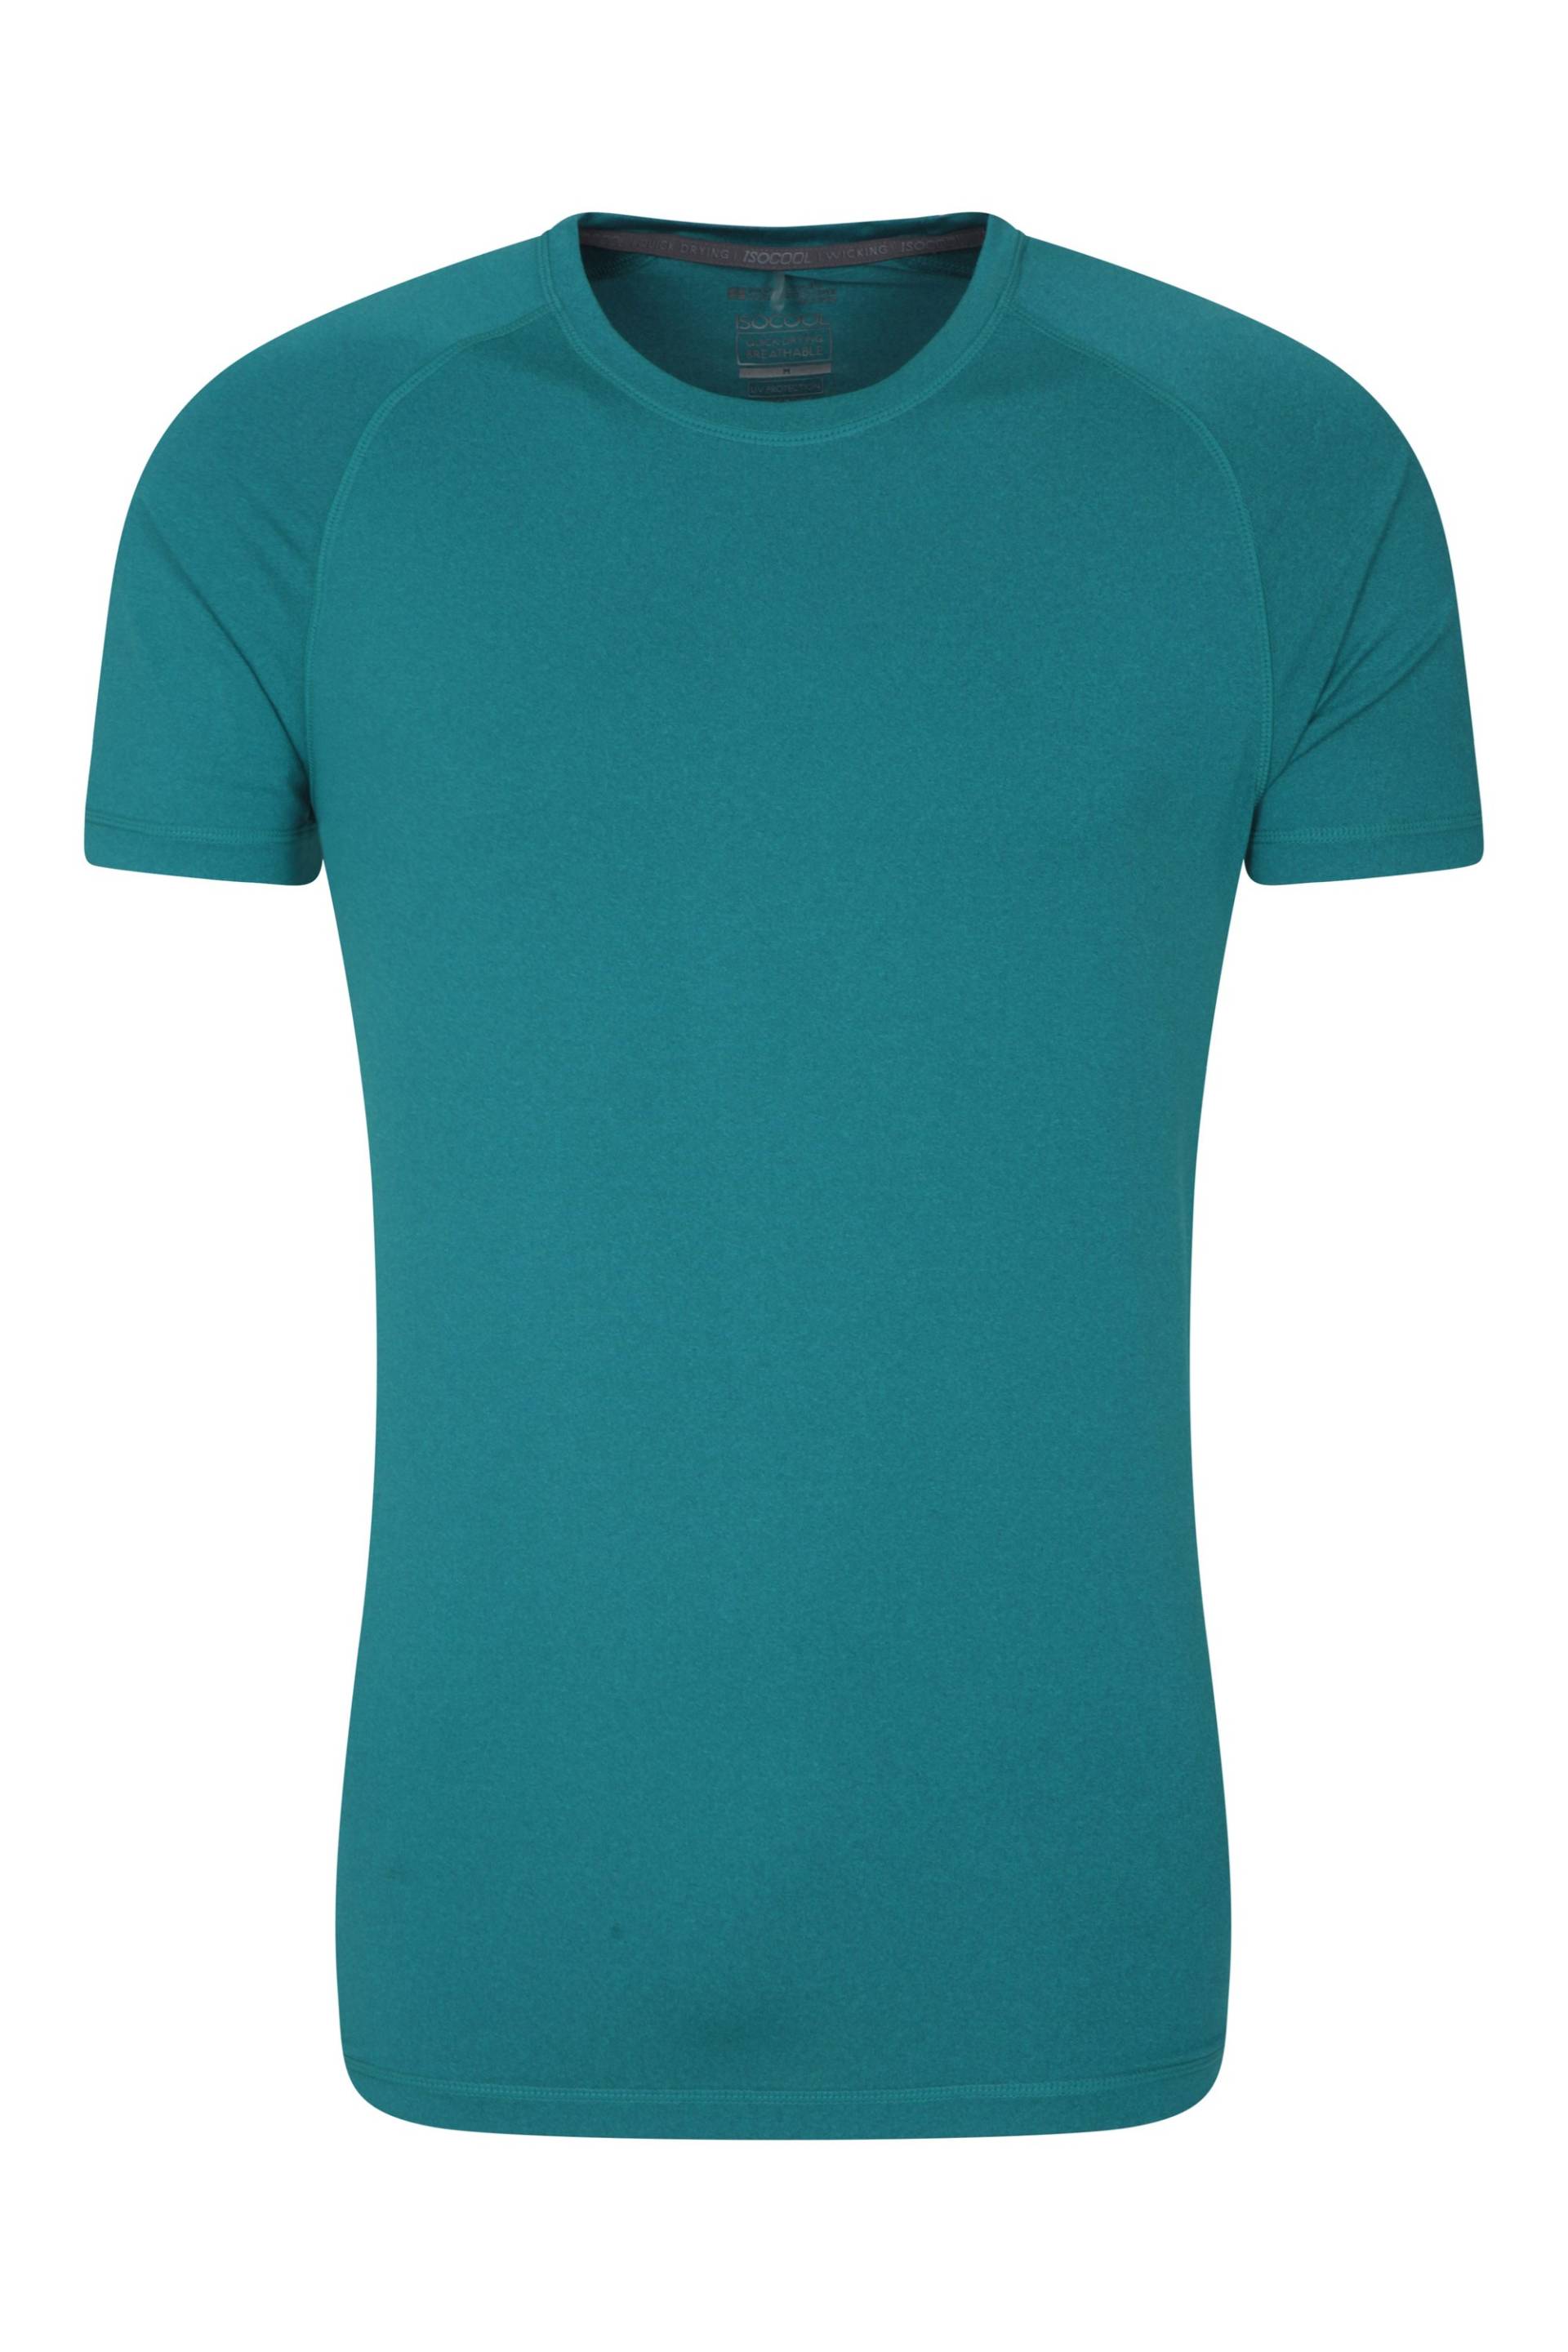 Agra Melange Herren T-Shirt - Dunkel Aquamarin von Mountain Warehouse